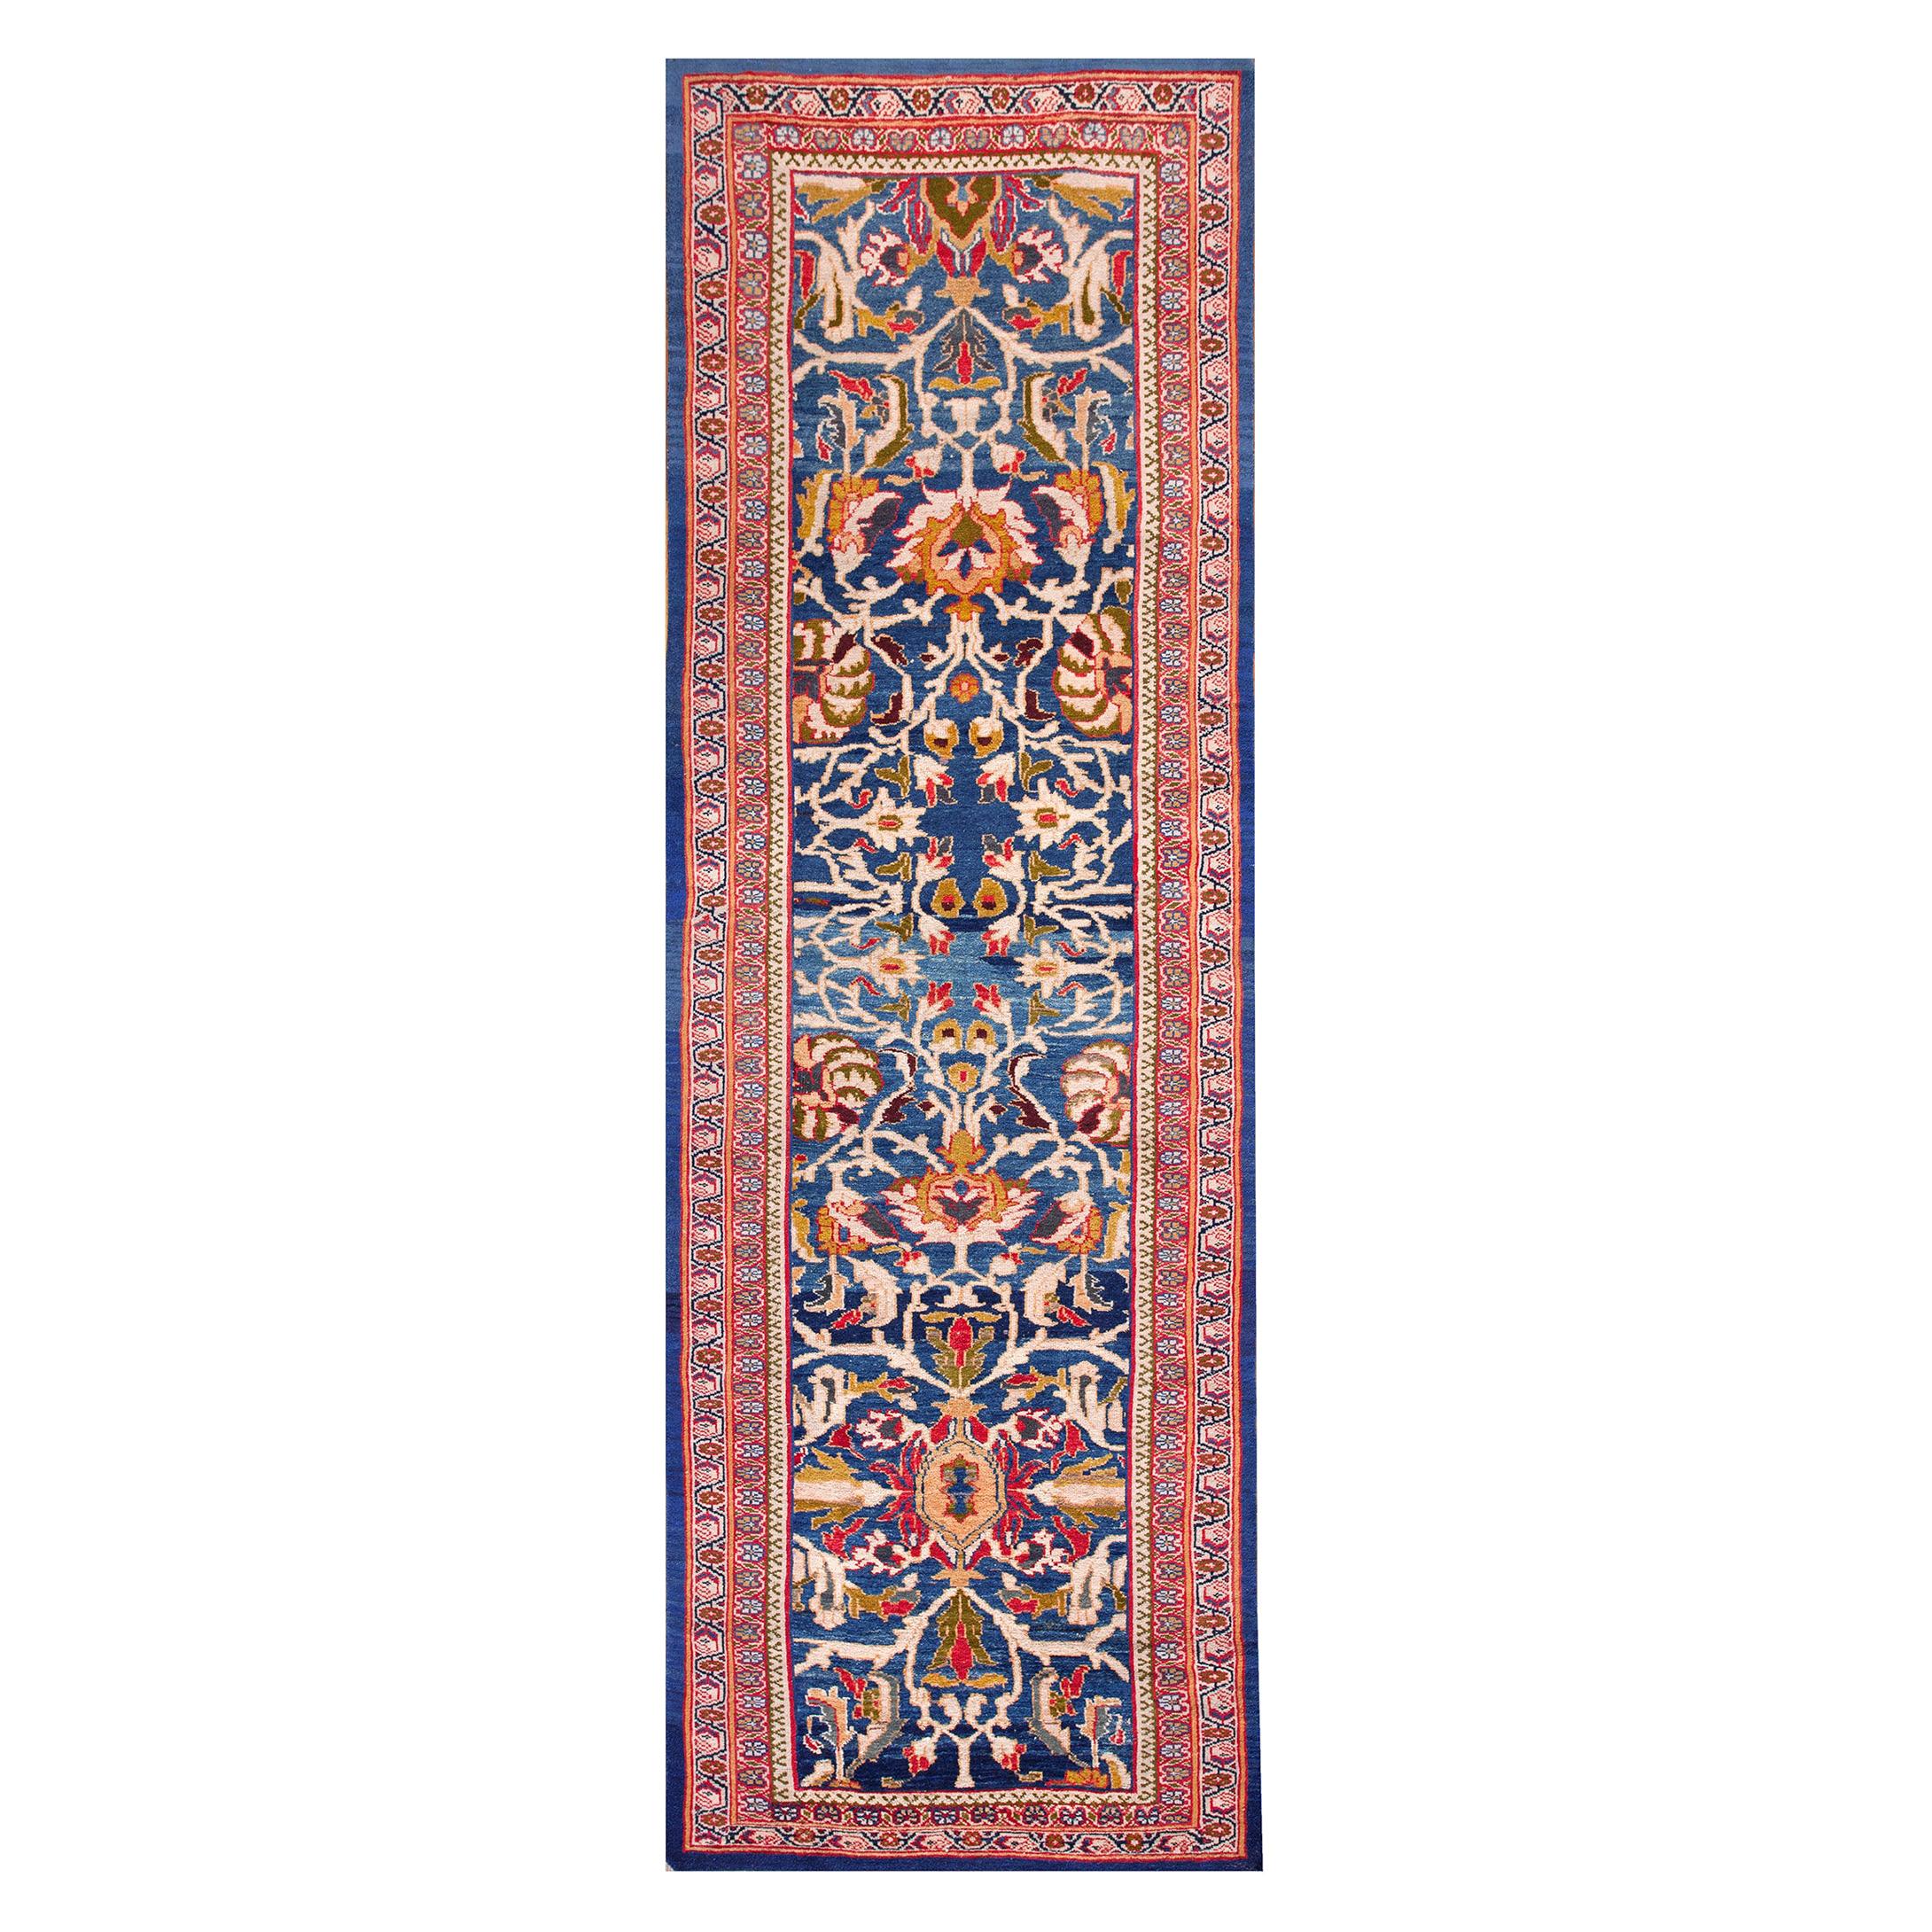 19th Century Persian Ziegler Sultanabad Carpet ( 4'3" x 14'6" - 130 x 442 ) For Sale